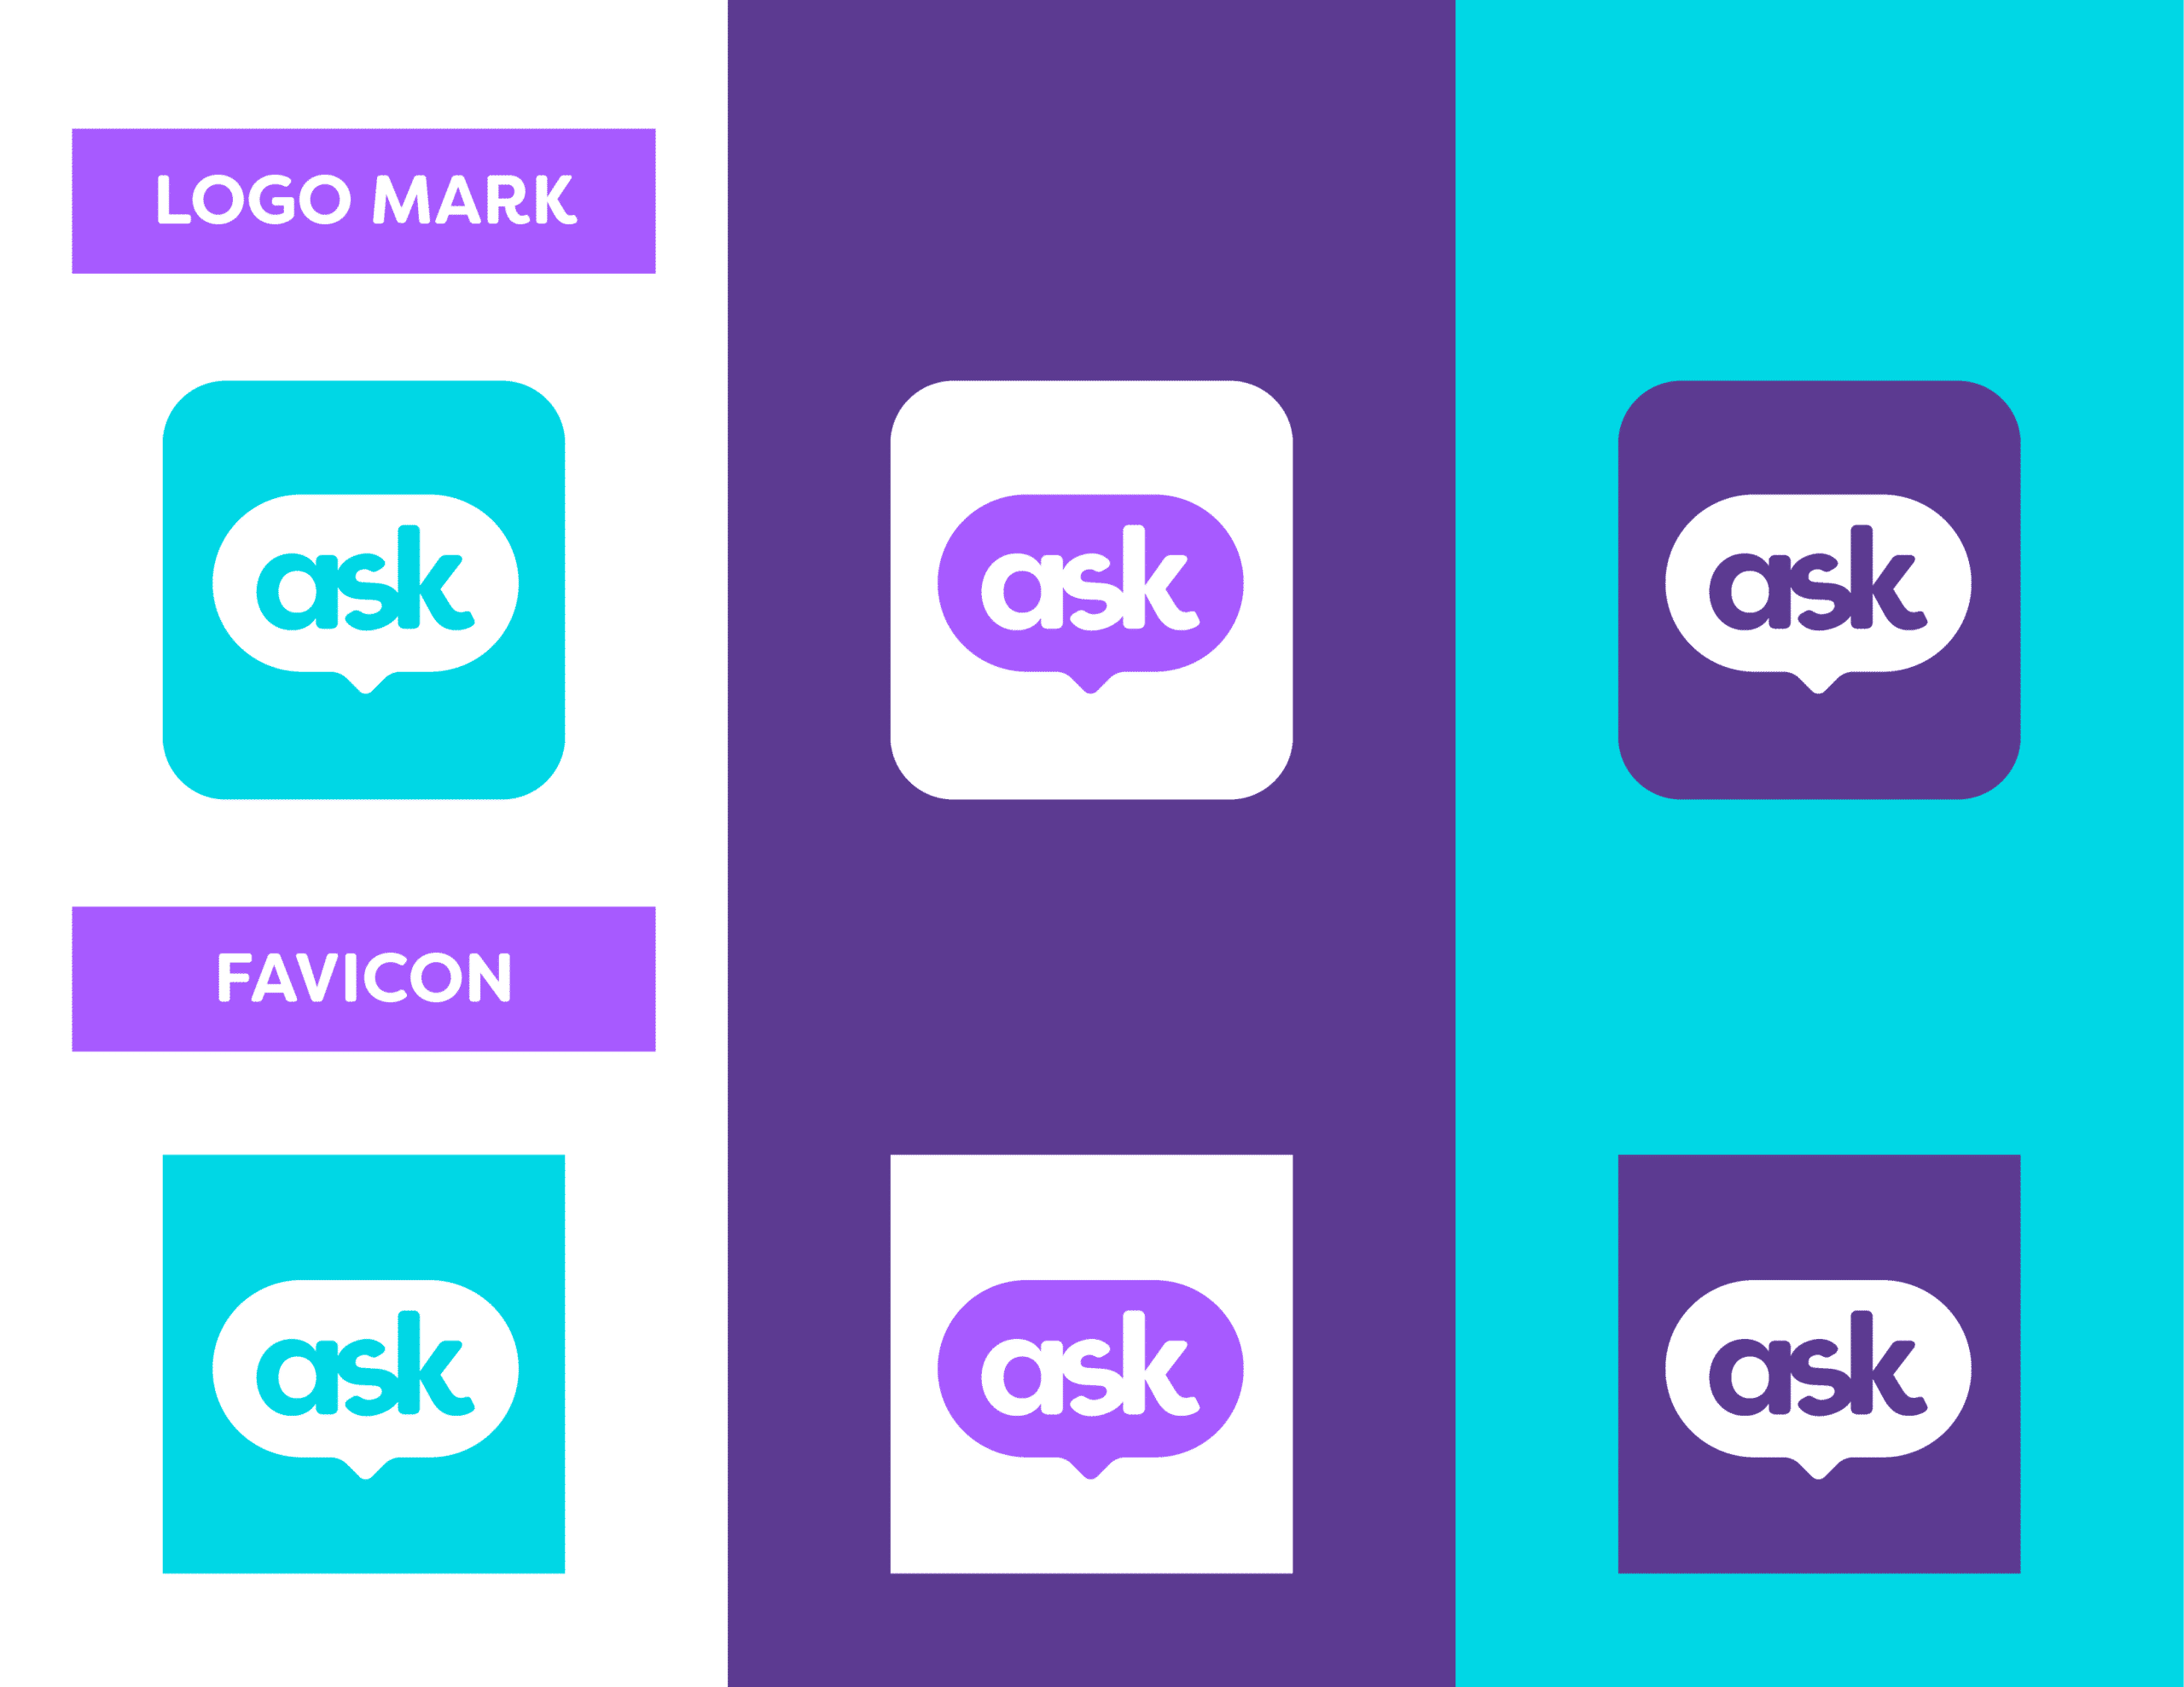 02AskBK_Logo Mark and Favicon